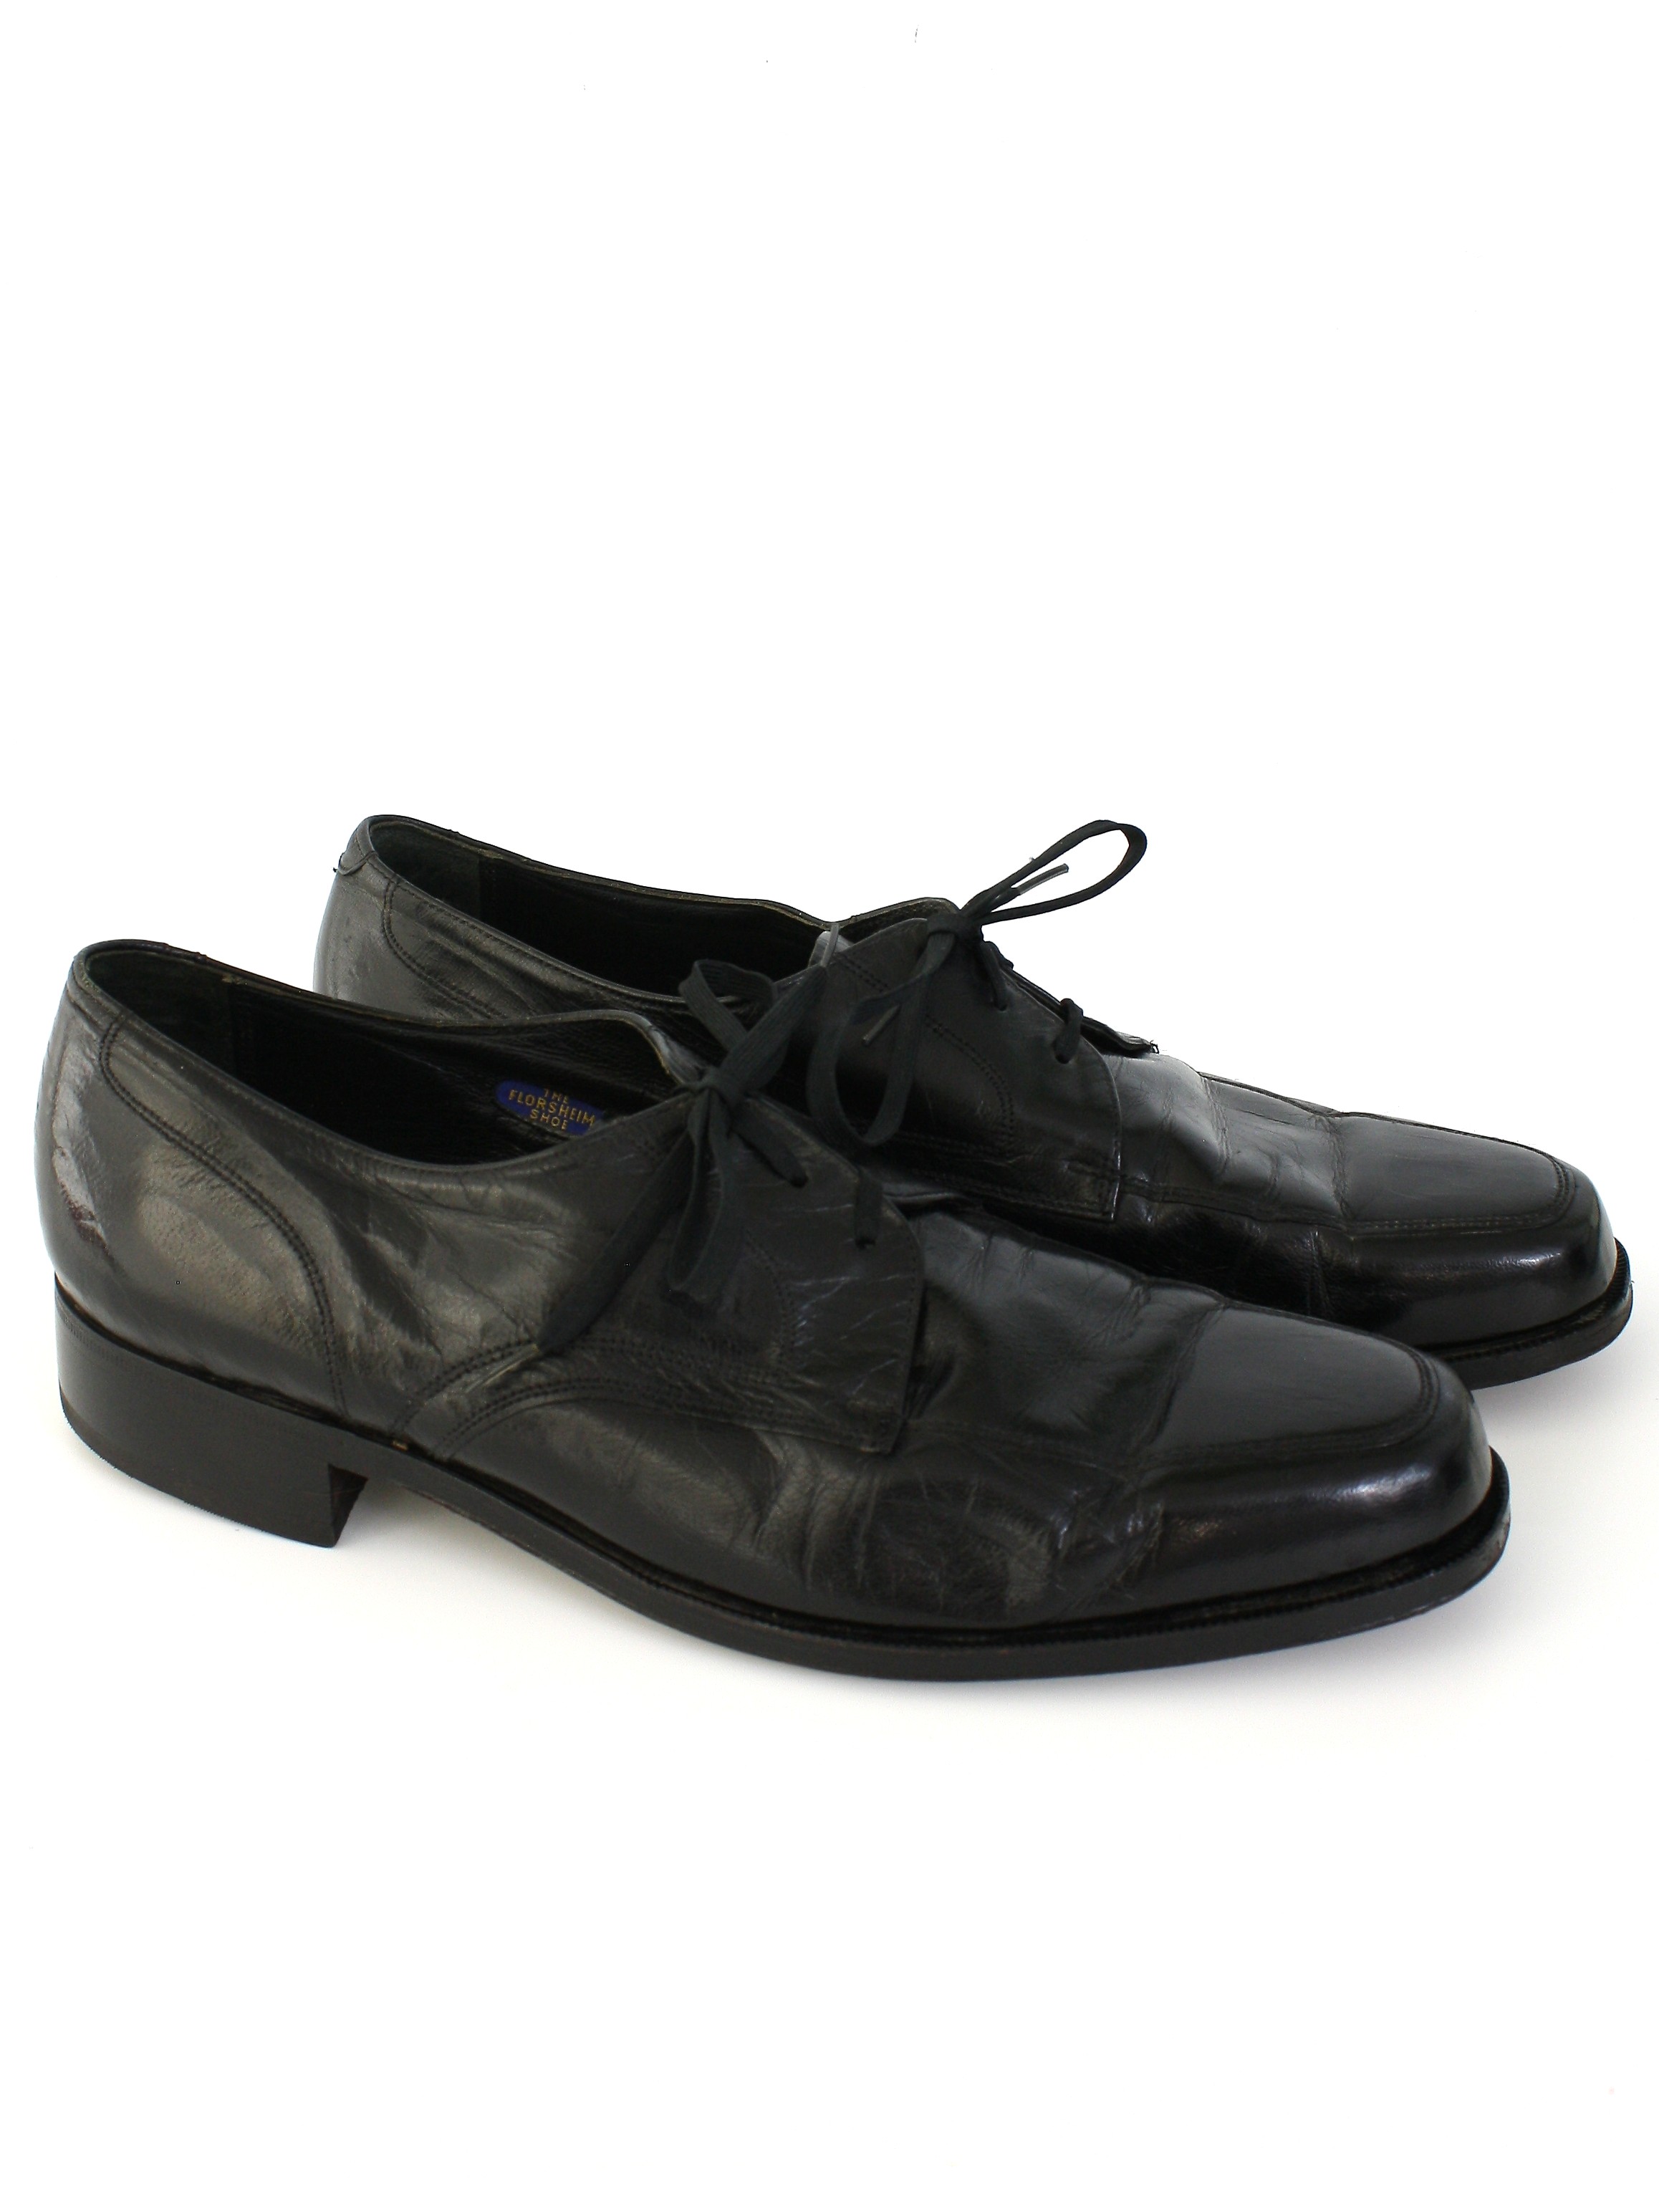 1990's Retro Shoes: 90s -Florsheim- Mens black smooth leather oxfords ...